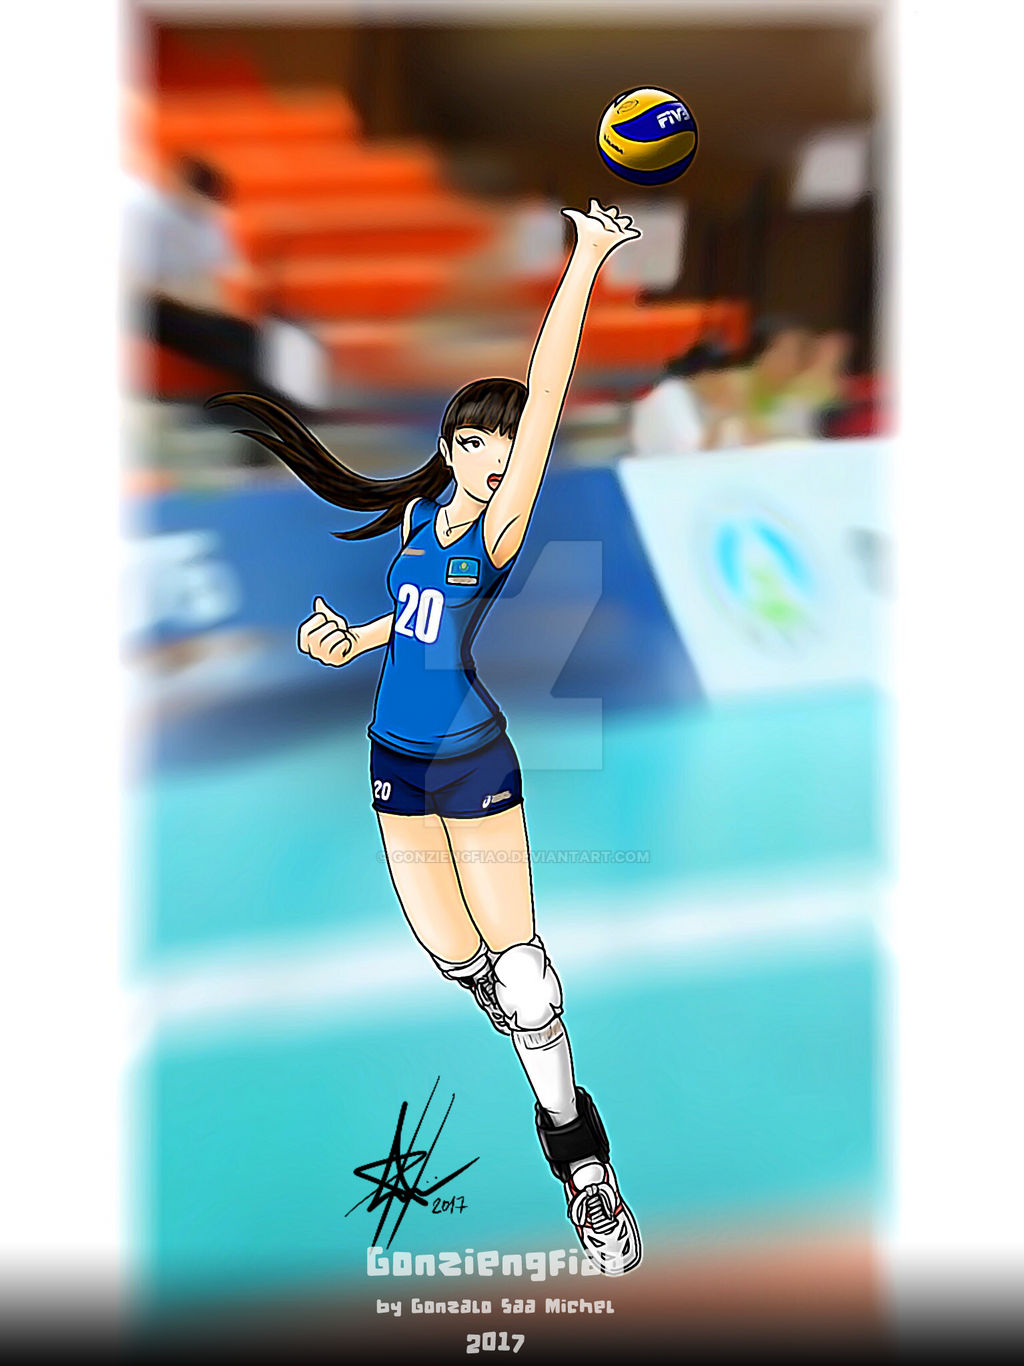 sabina altynbekova  Voleibol, Anime, Garotas